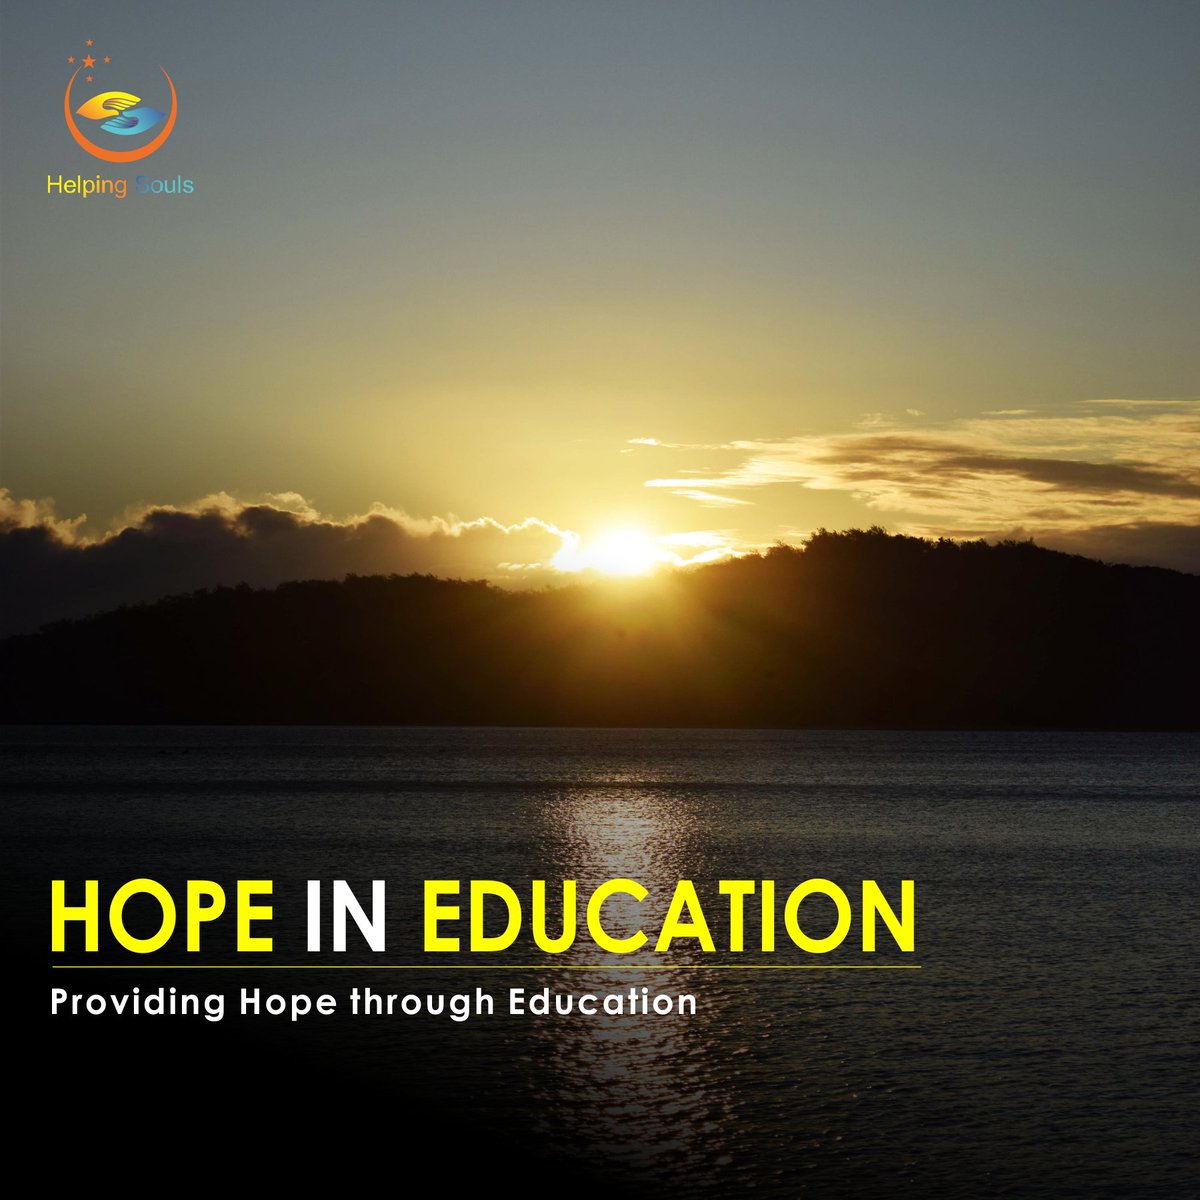 HOPE IN EDUCATION
-Providing hope through education

Hashtags
#HopeInEducation
#EducationForHope
#EmpowerThroughLearning
#CharityForChange
#BrighterFuturesAhead
#EducateToEmpower
#HopefulLearning
#GiveHopeLearnHope
#ChangingLivesThroughEducation
#EducationalHopeMission
#Hopeful